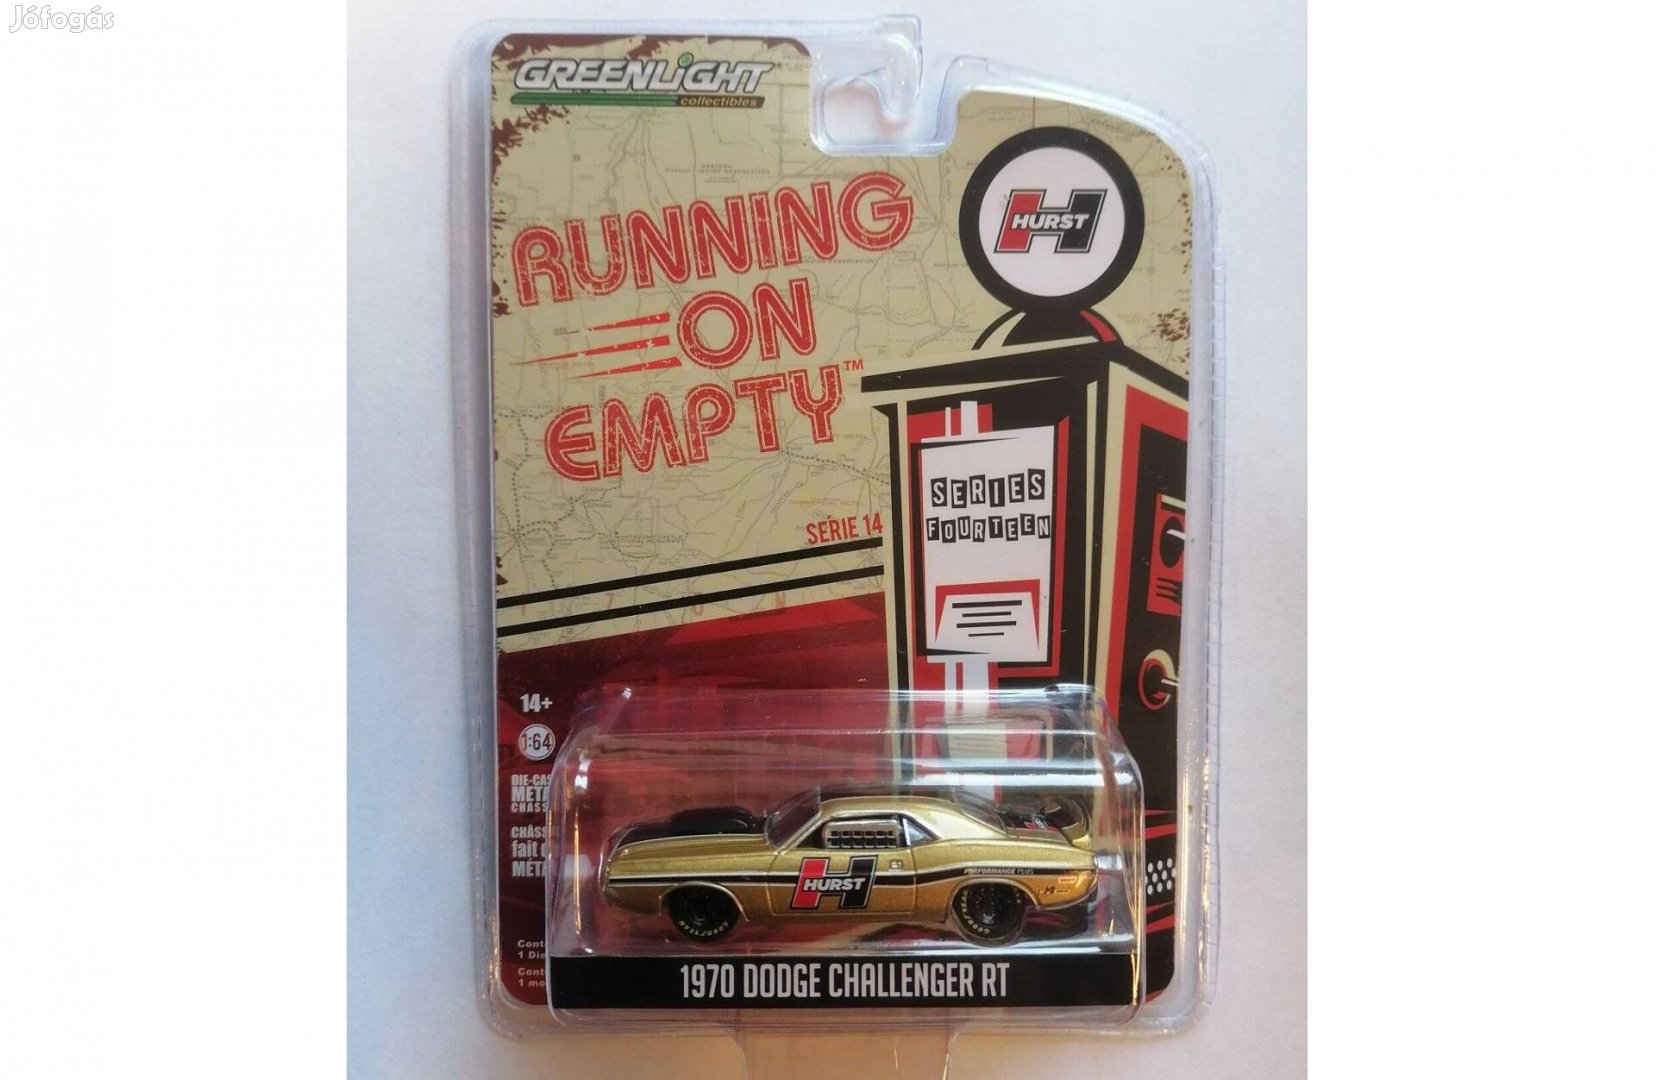 Greenlight running on empty series 14 1970 Dodge Challenger R/T Gold